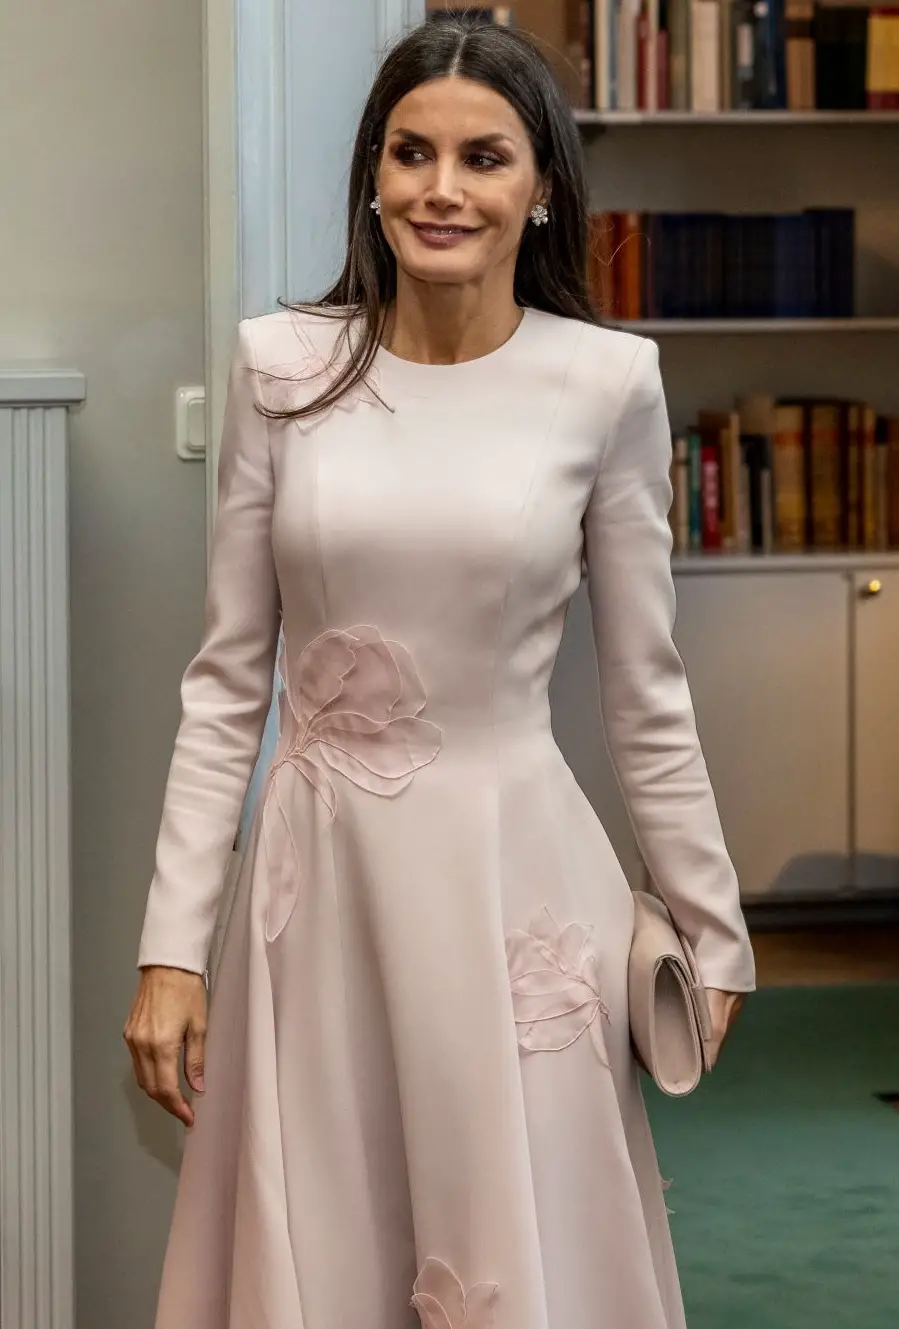 Queen Letizia chose a delicate dusty pink dress from Spanish designer Pedro Del Hierro